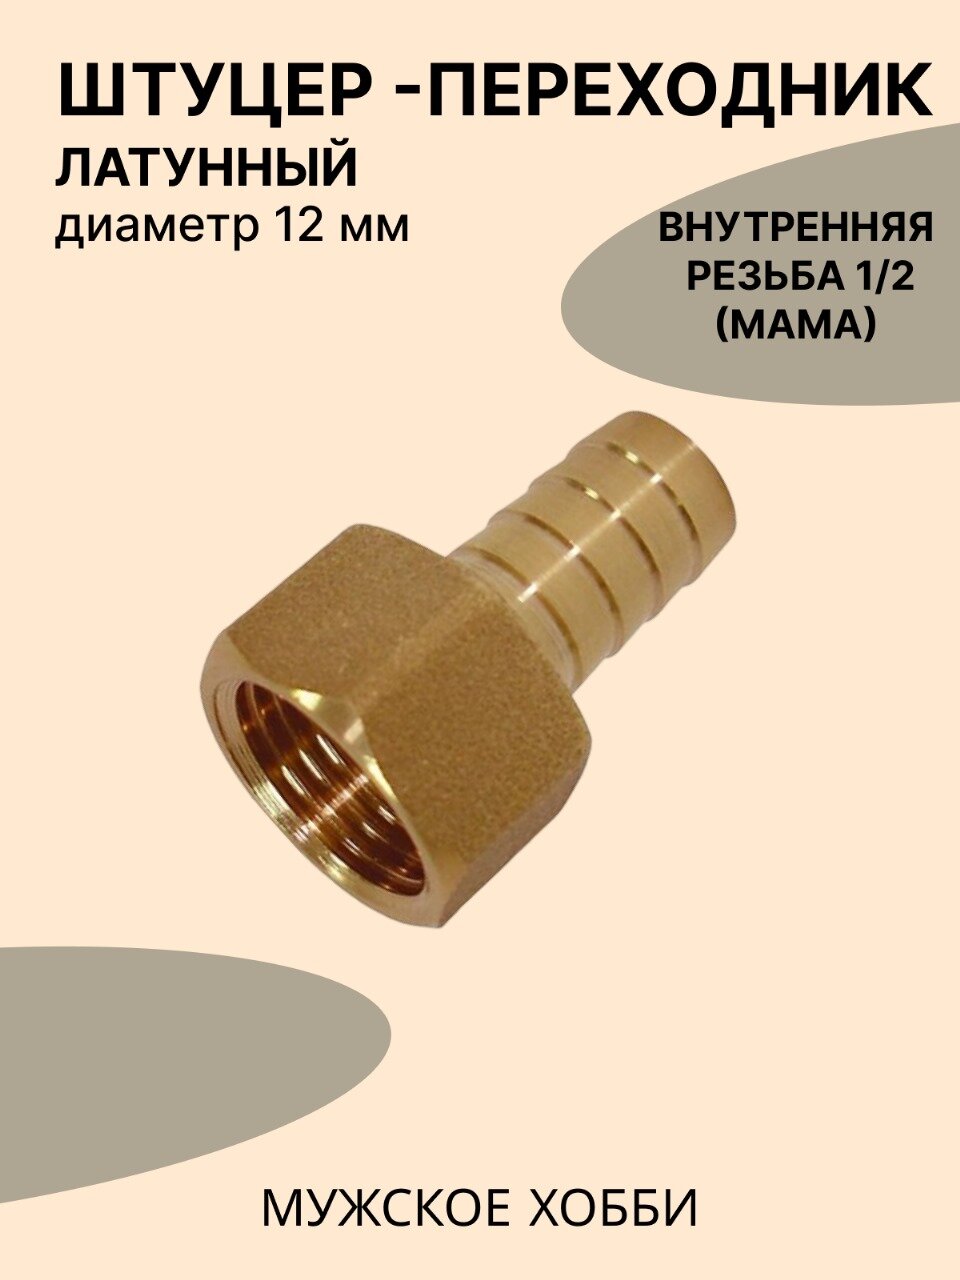 Штуцер (переходник) 1/2 дюйма латунный мама на 12 мм